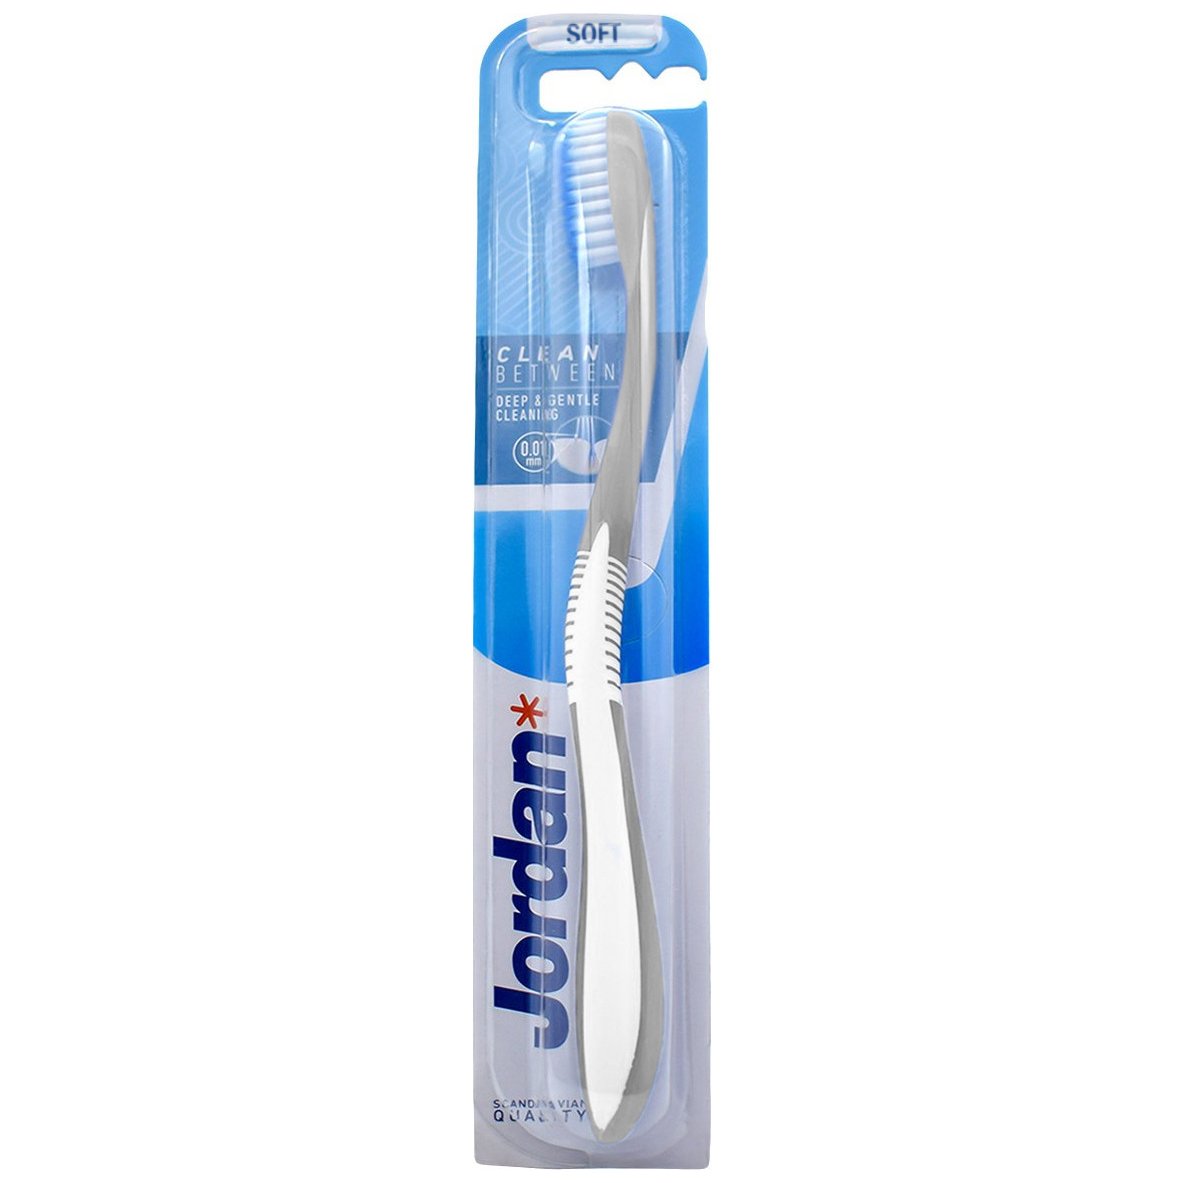 Jordan Clean Between Toothbrush Soft 0.01mm Μαλακή Οδοντόβουρτσα για Βαθύ Καθαρισμό με Εξαιρετικά Λεπτές Ίνες 1 Τεμάχιο, Κωδ 310036 – Γκρι